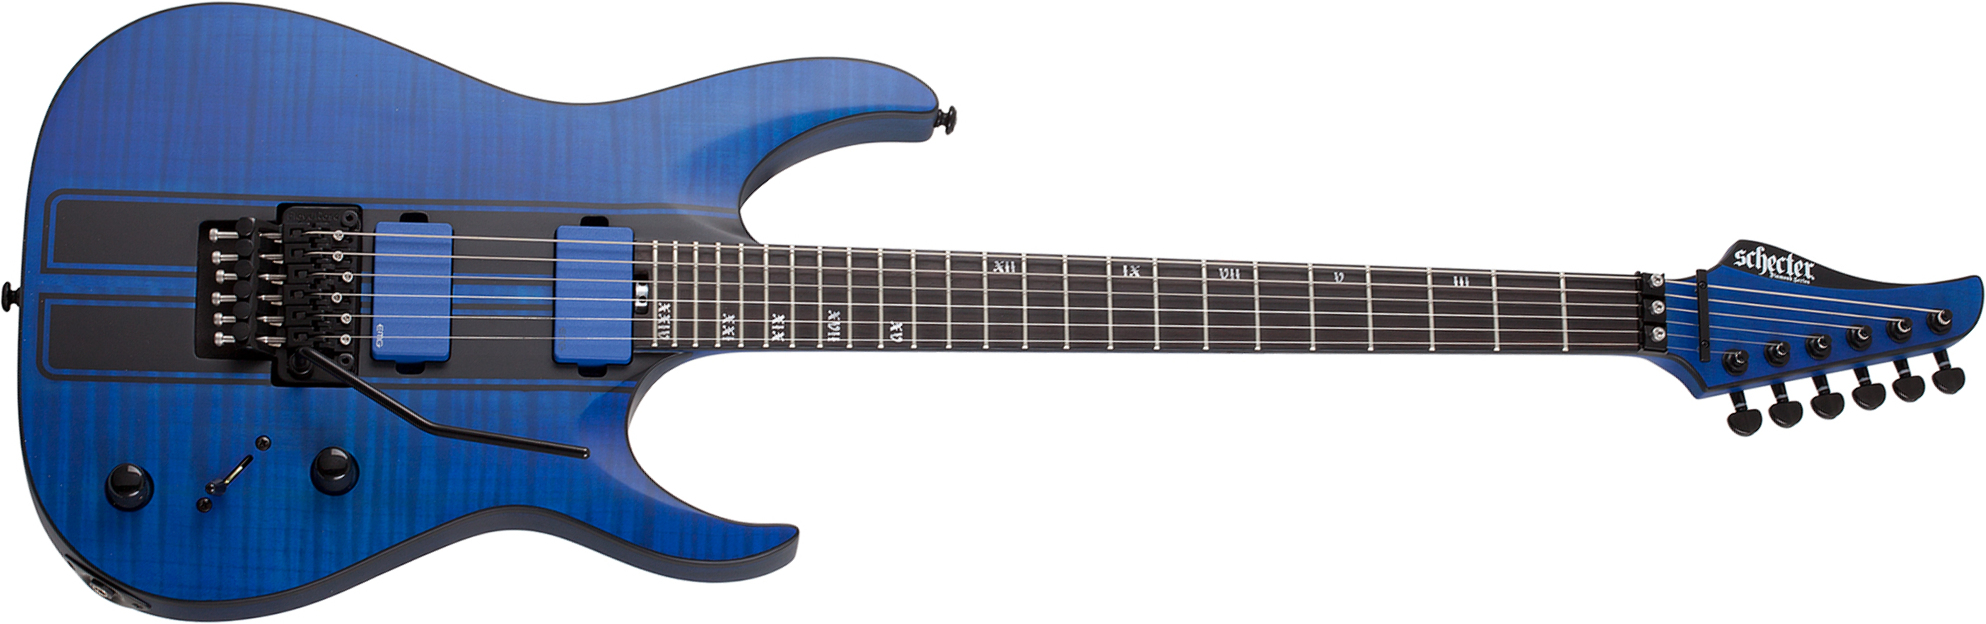 Schecter Banshee Gt Fr 2h Emg Eb - Satin Trans Blue - Guitarra eléctrica con forma de str. - Main picture